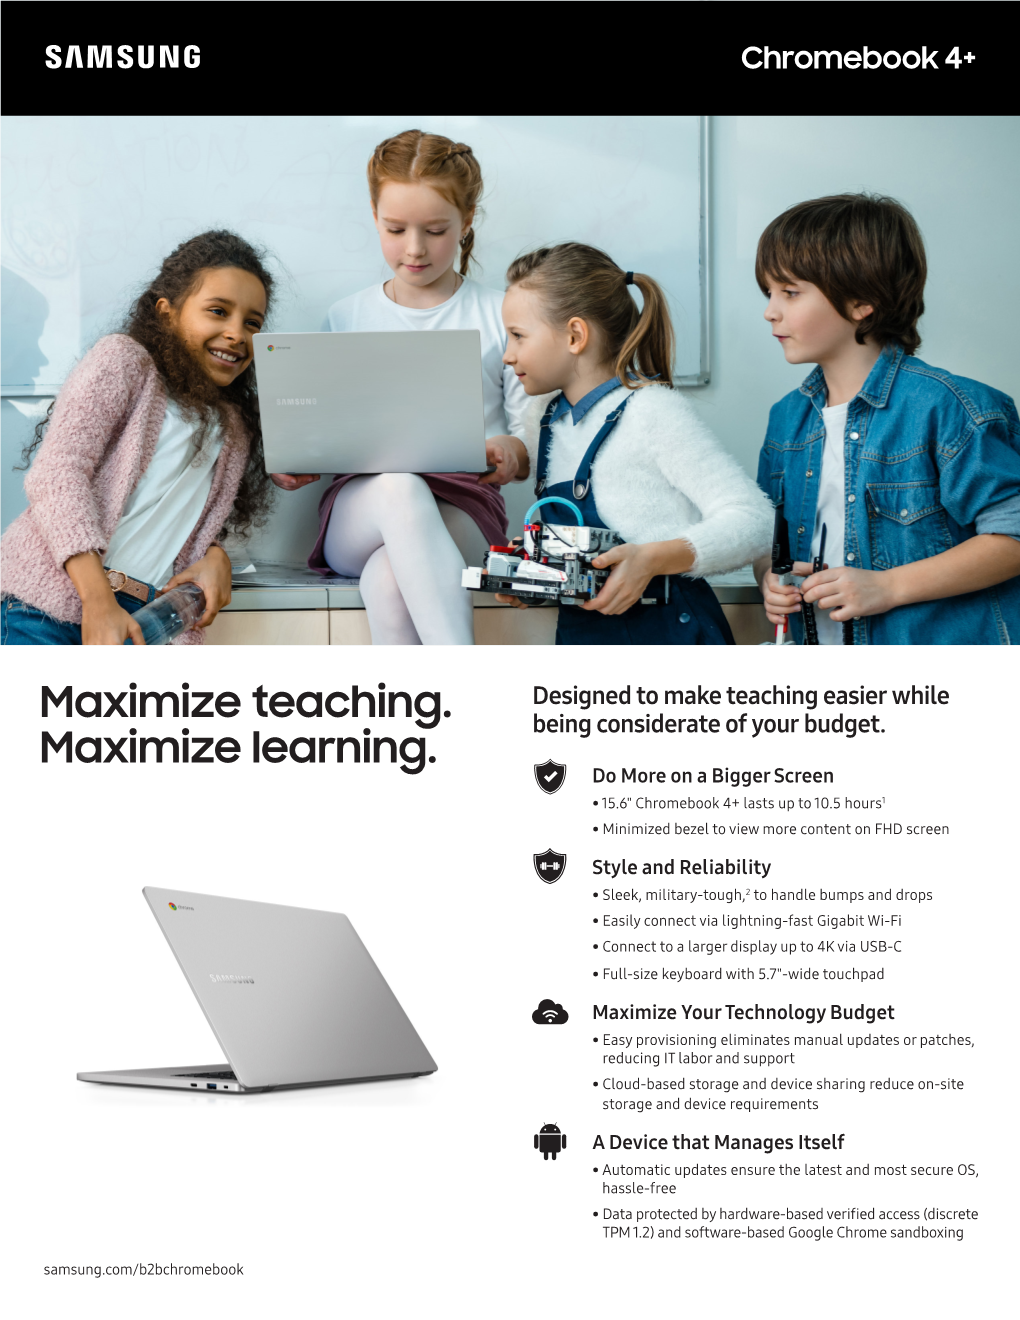 Maximize Teaching. Maximize Learning